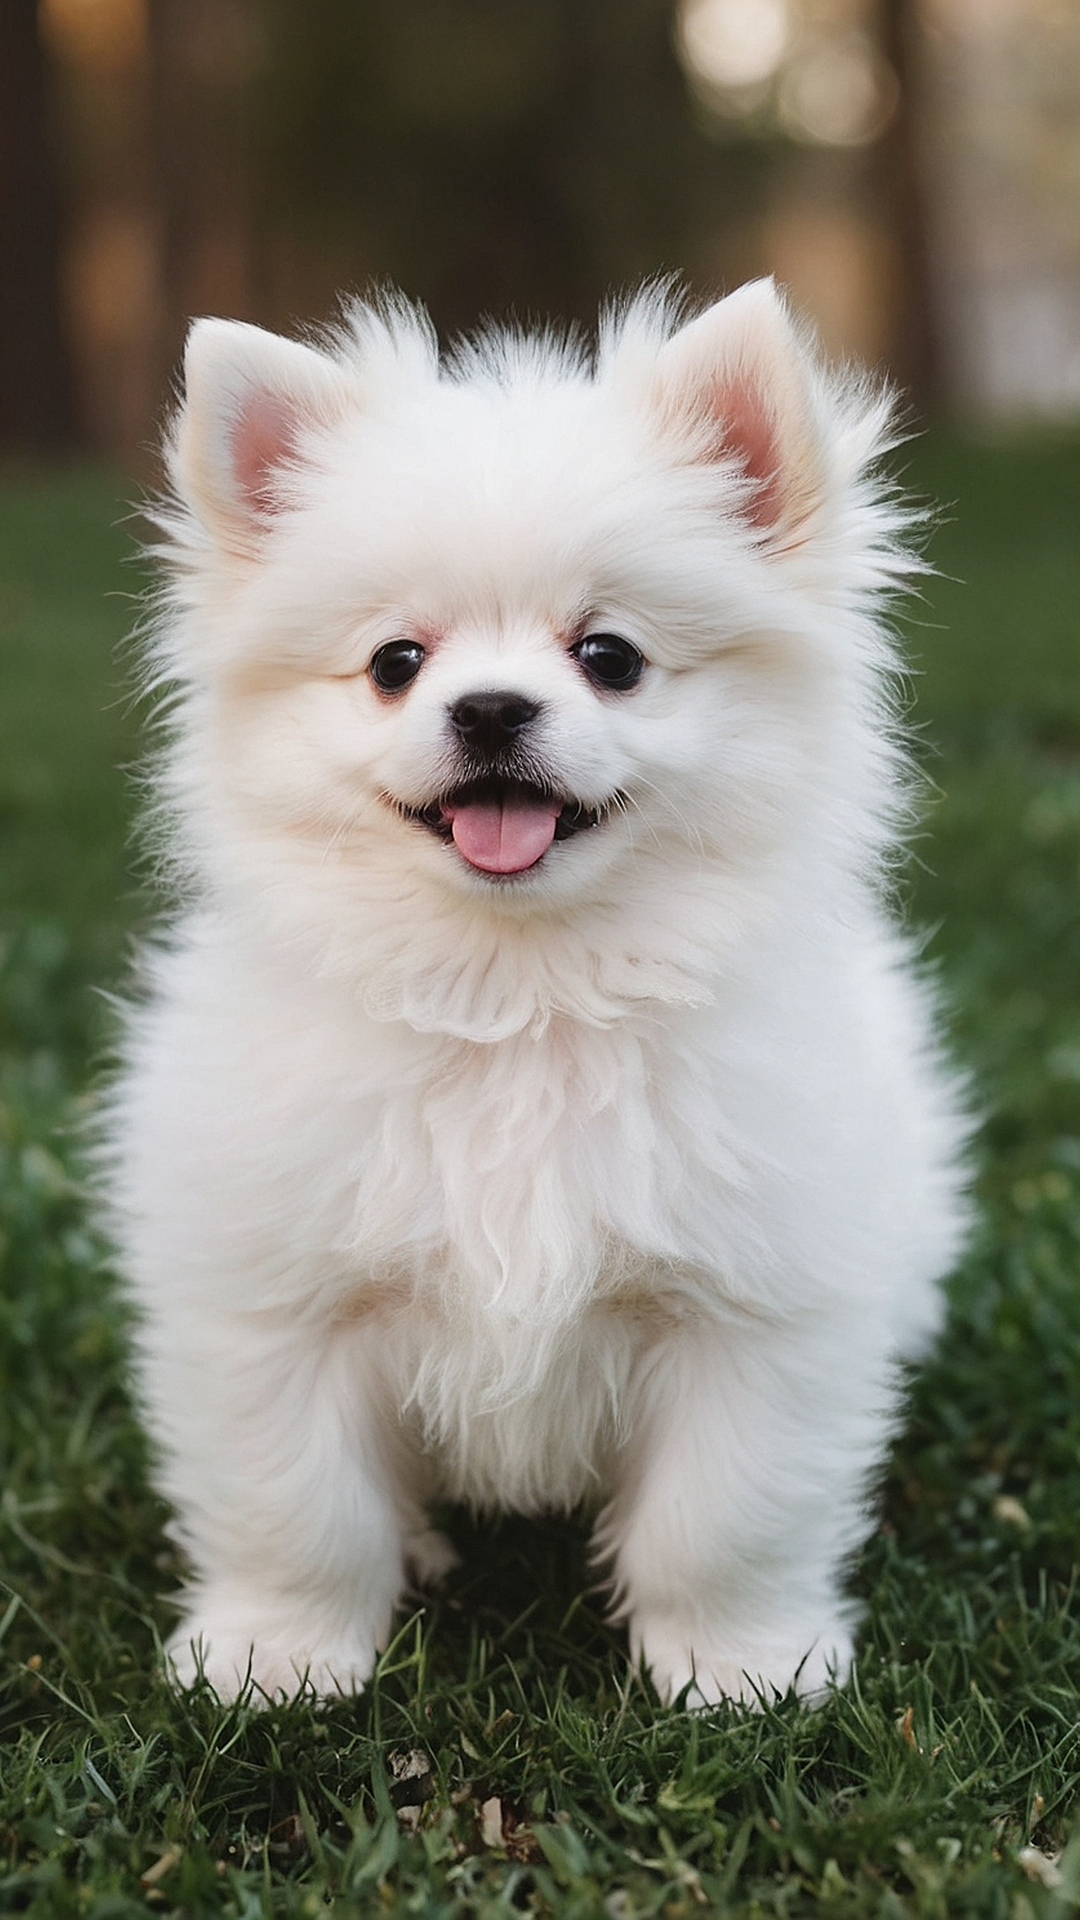 Cuteness Overload: Fluffy Puppies Edition